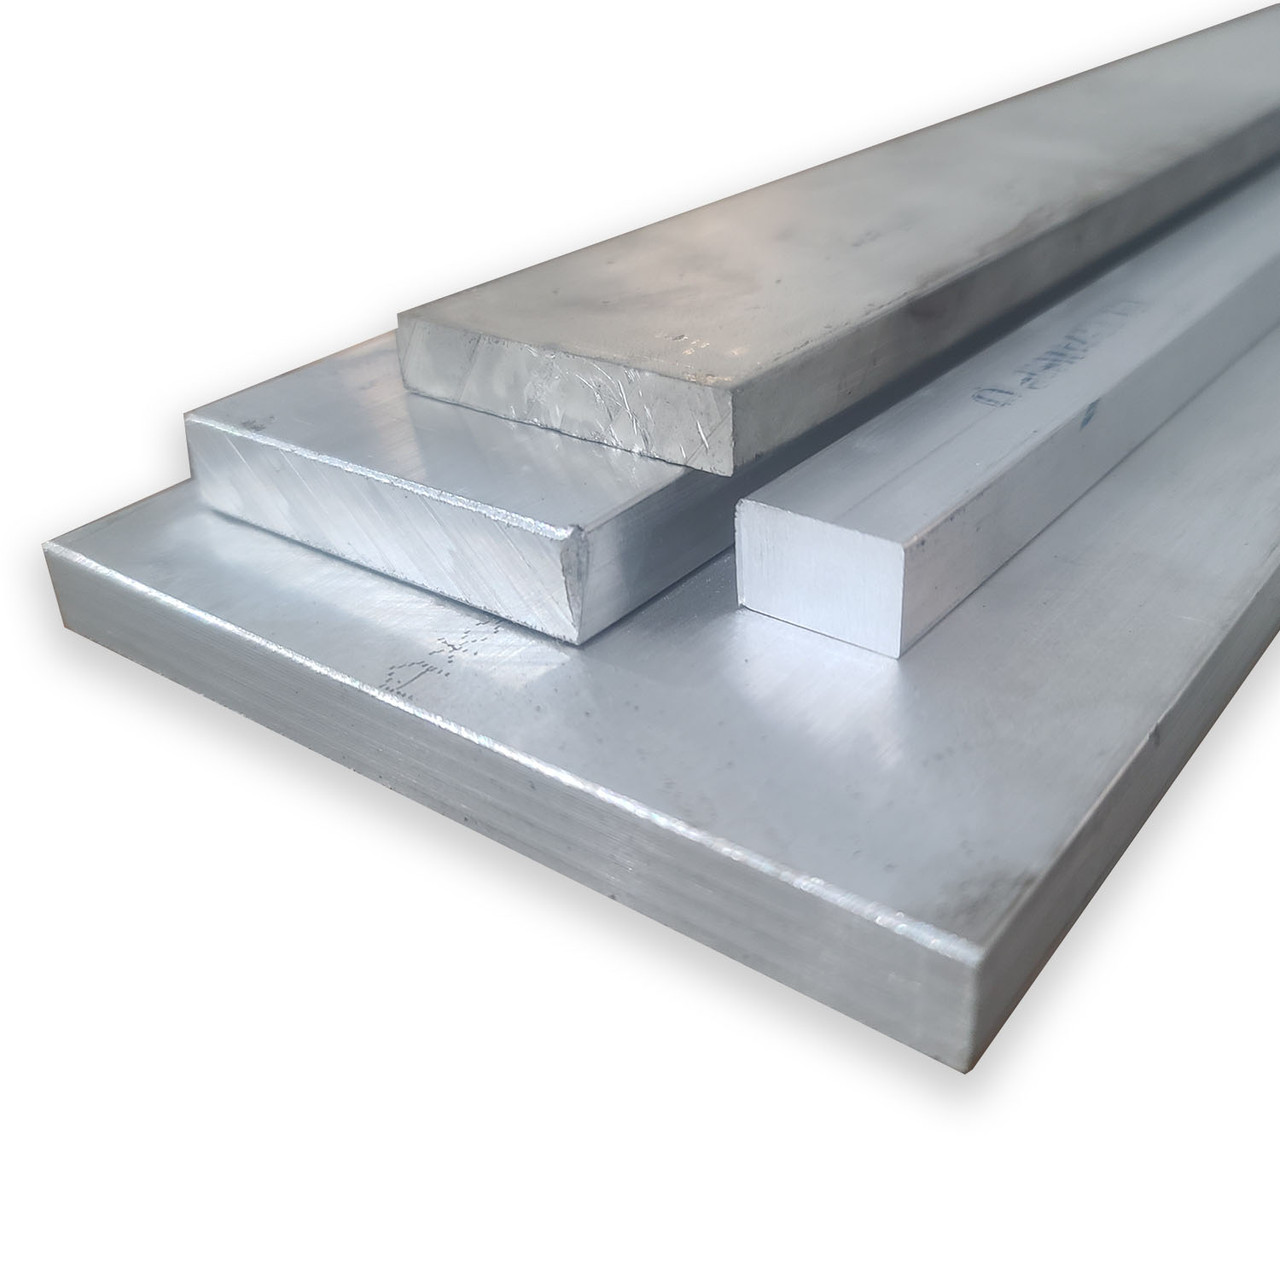 1.25" x 4" x 12", 2024-T351 Aluminum Flat Bar